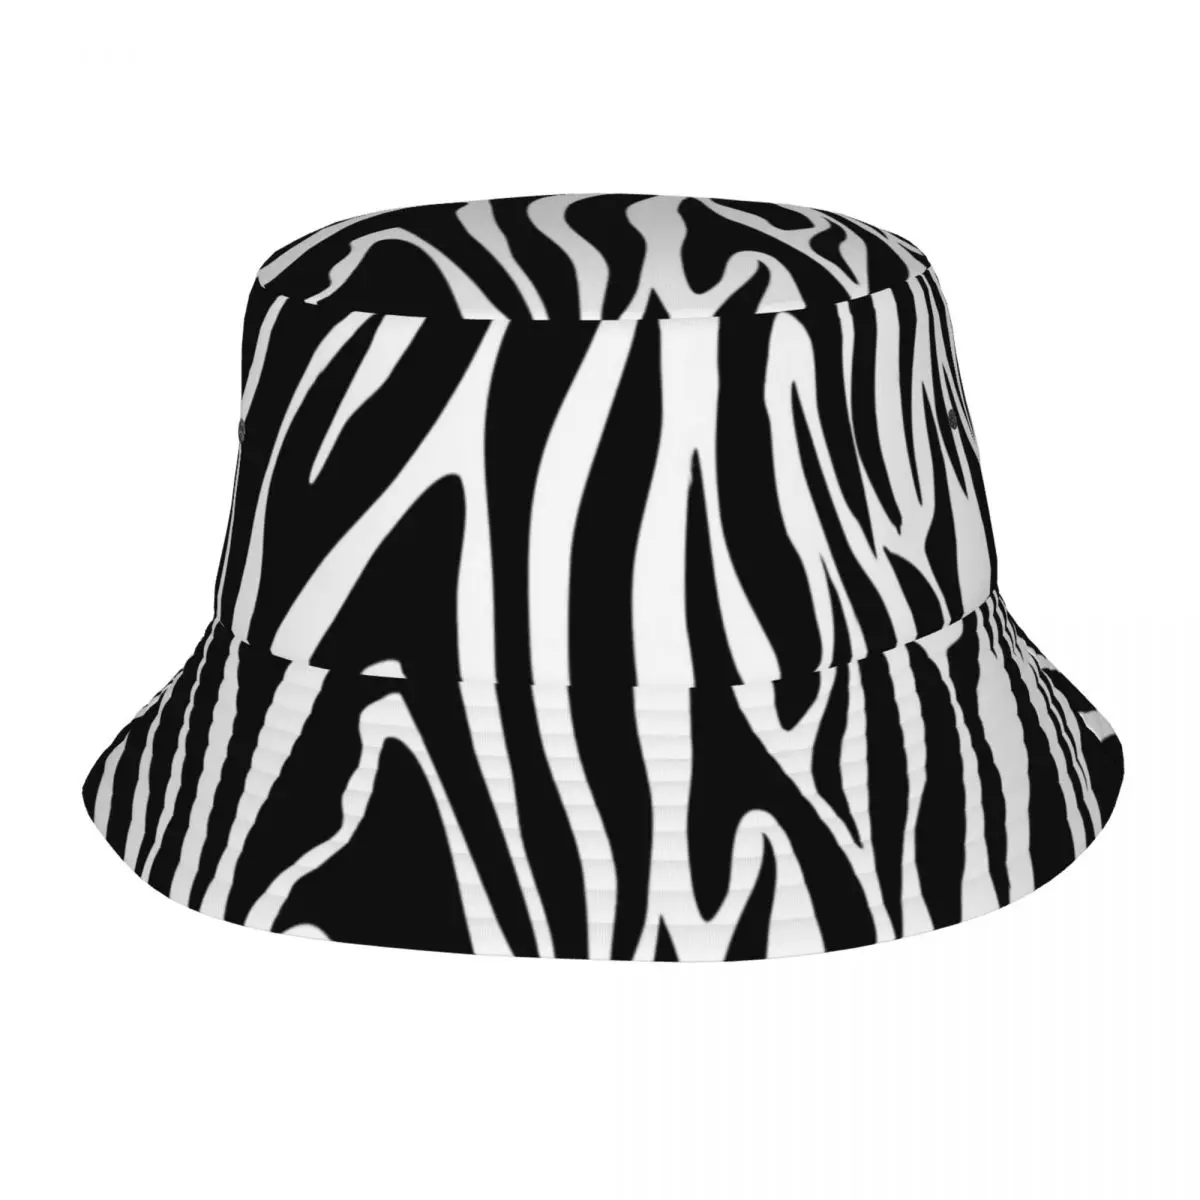 

Black And White Zebra Pattern Bucket Hats Panama For Man Woman Bob Hats Outdoor Autumn Fisherman Hats For Fishing Unisex Caps